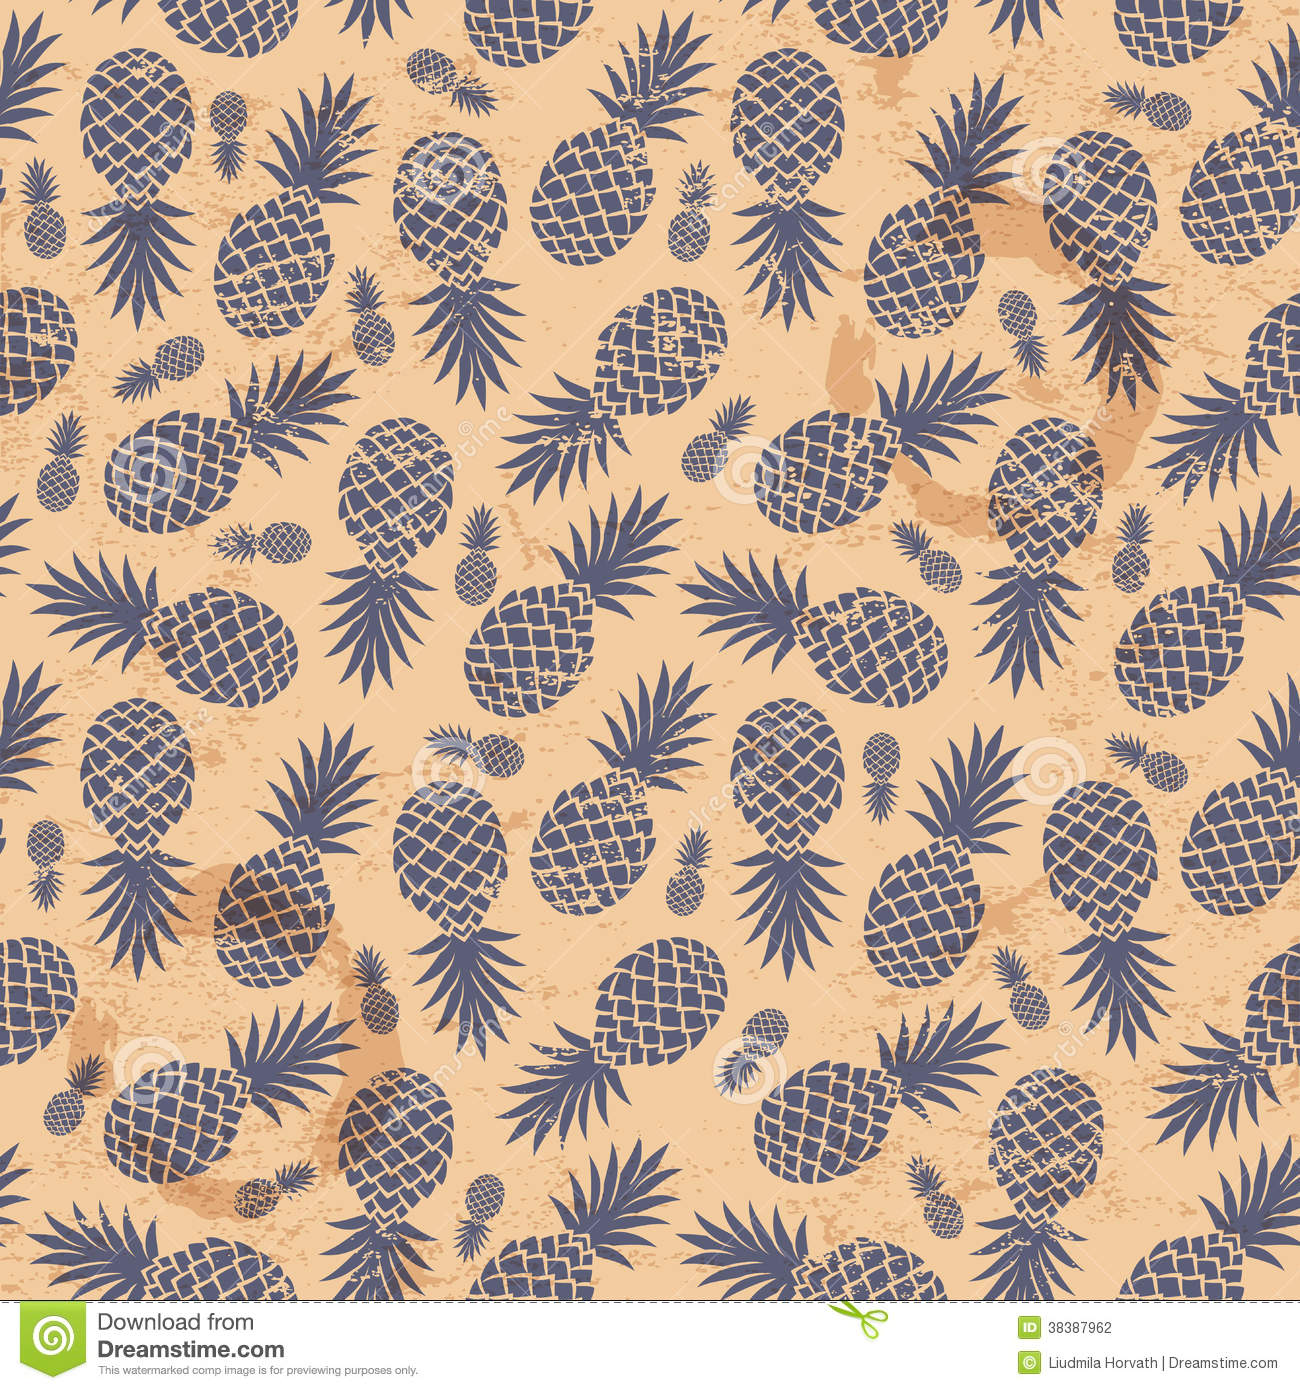 Pineapple Wallpaper Patterns